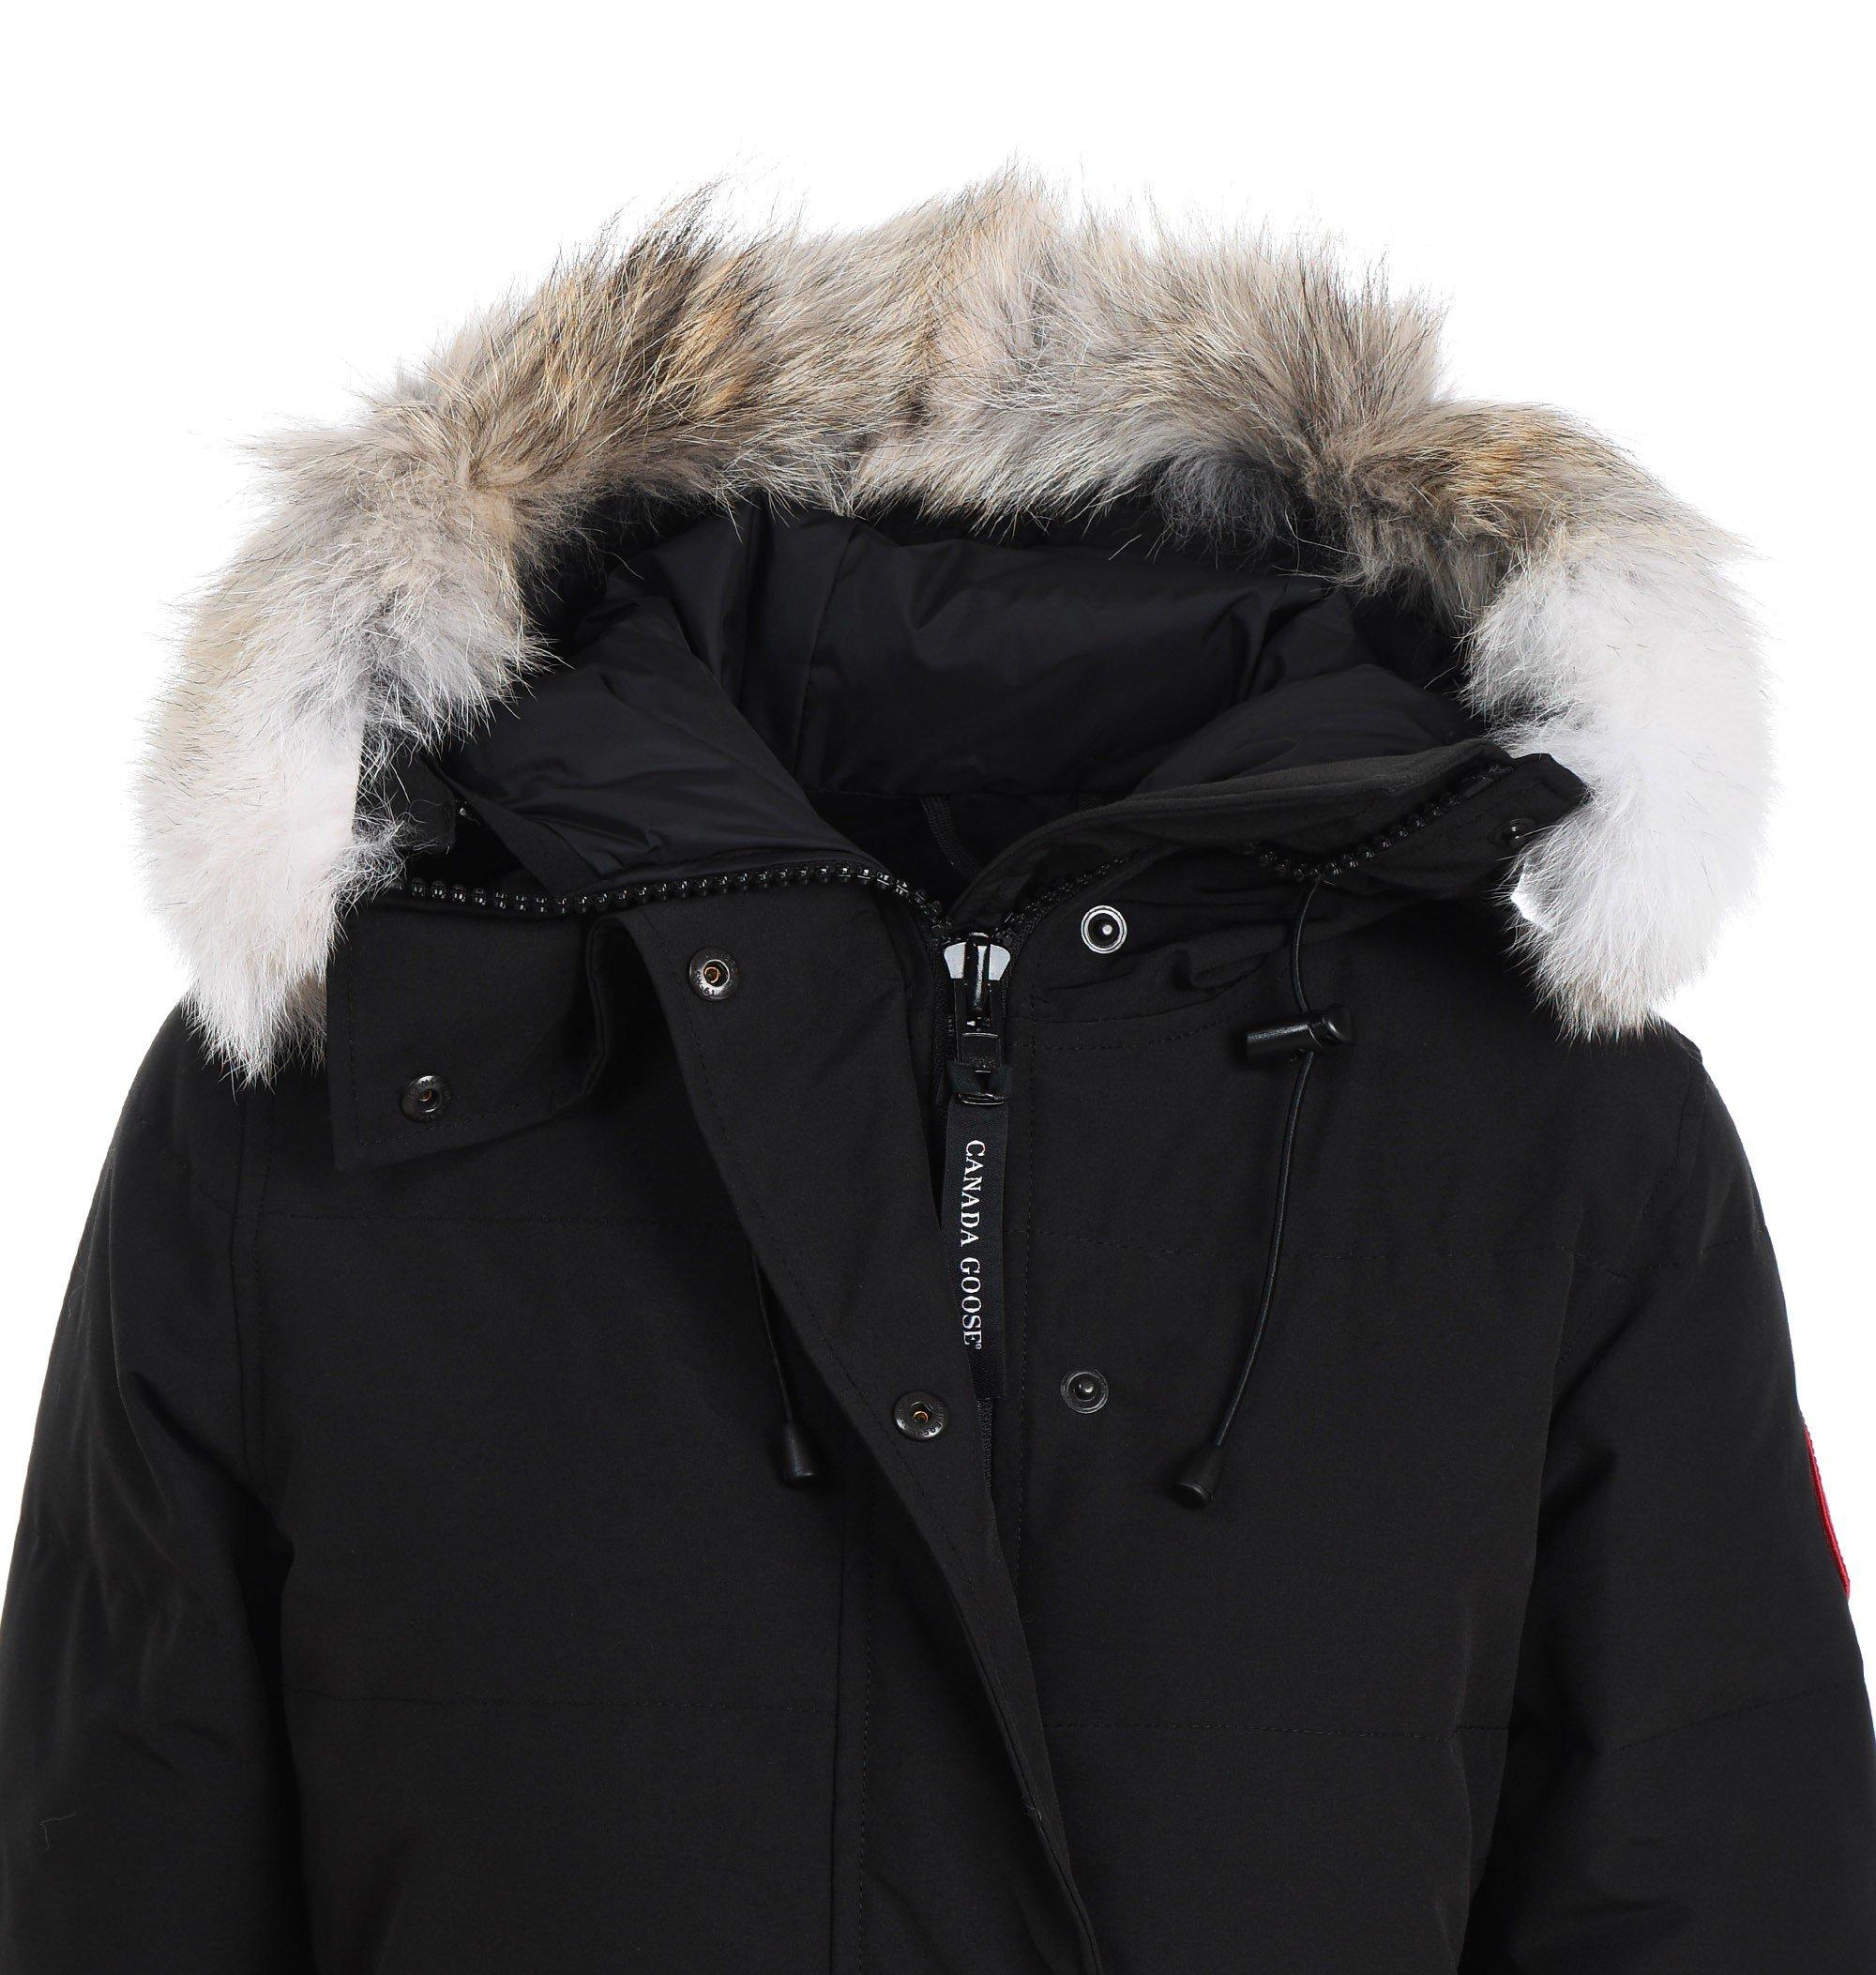 Canada Goose Synthetic Shelburne Fur Trim Parka Coat in Black - Lyst